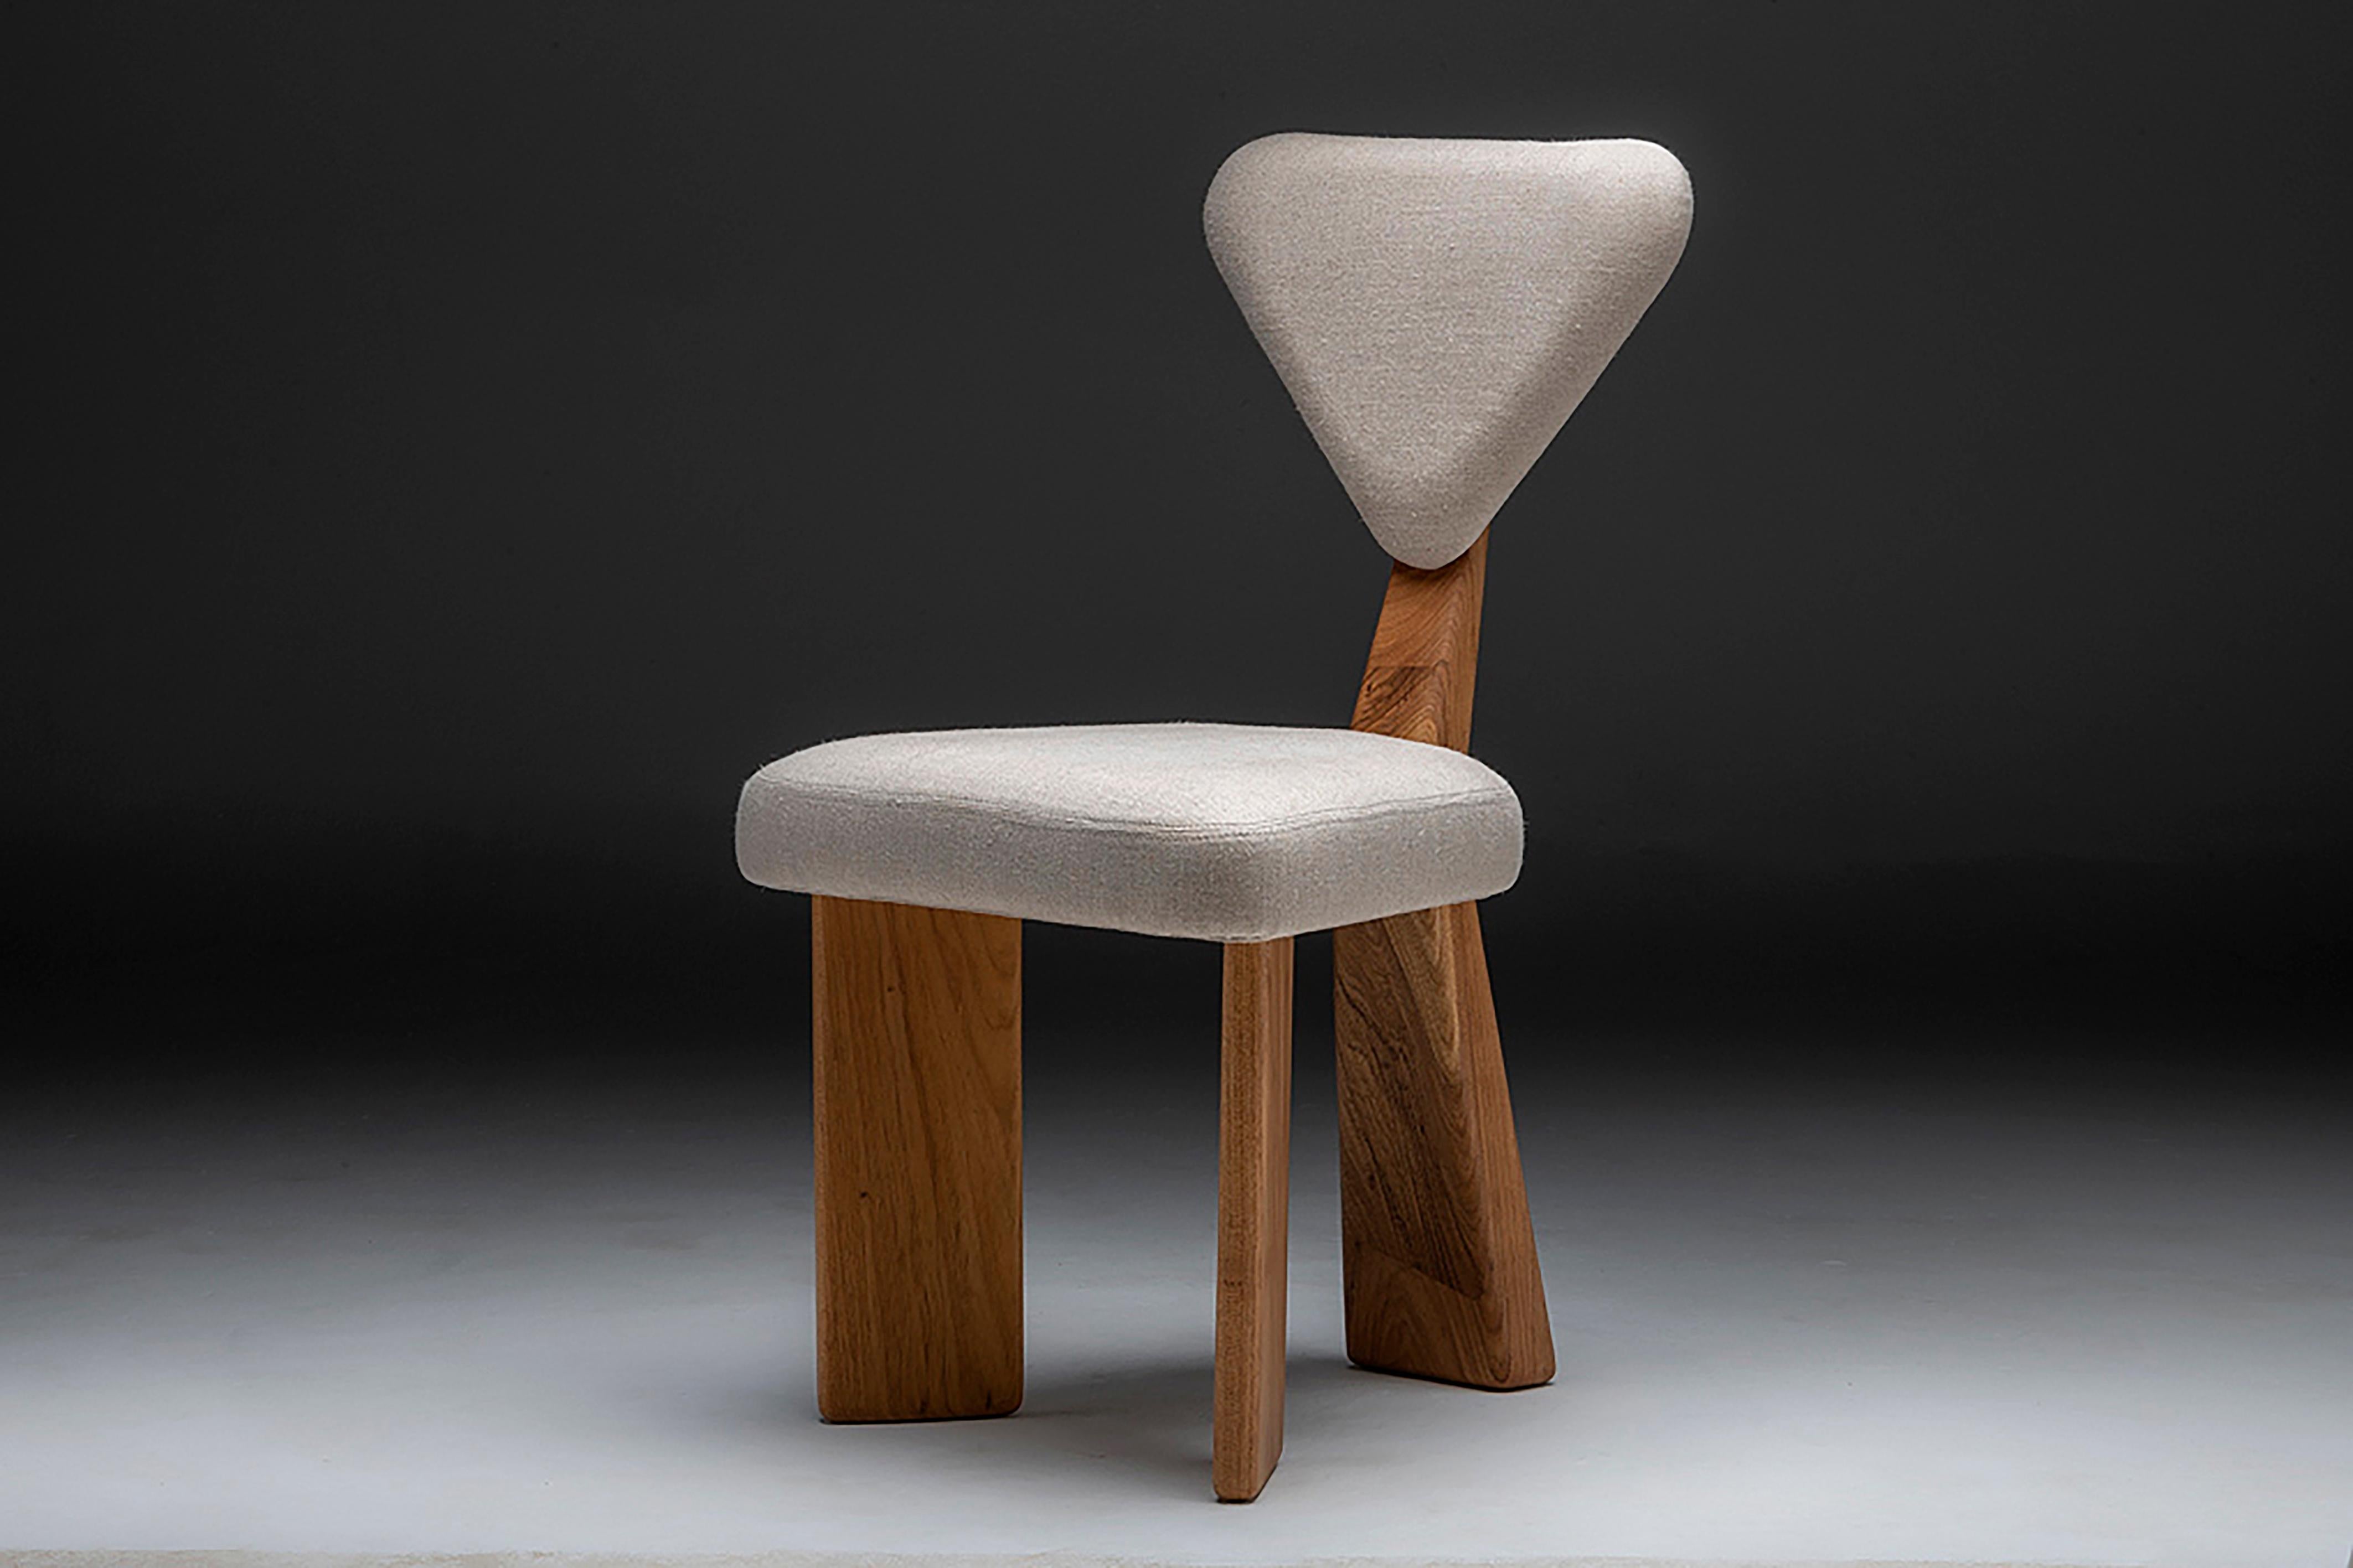 A set of  Giraffe Chair in Solid Brazilian Walnut Wood by Juliana Vasconcellos 3